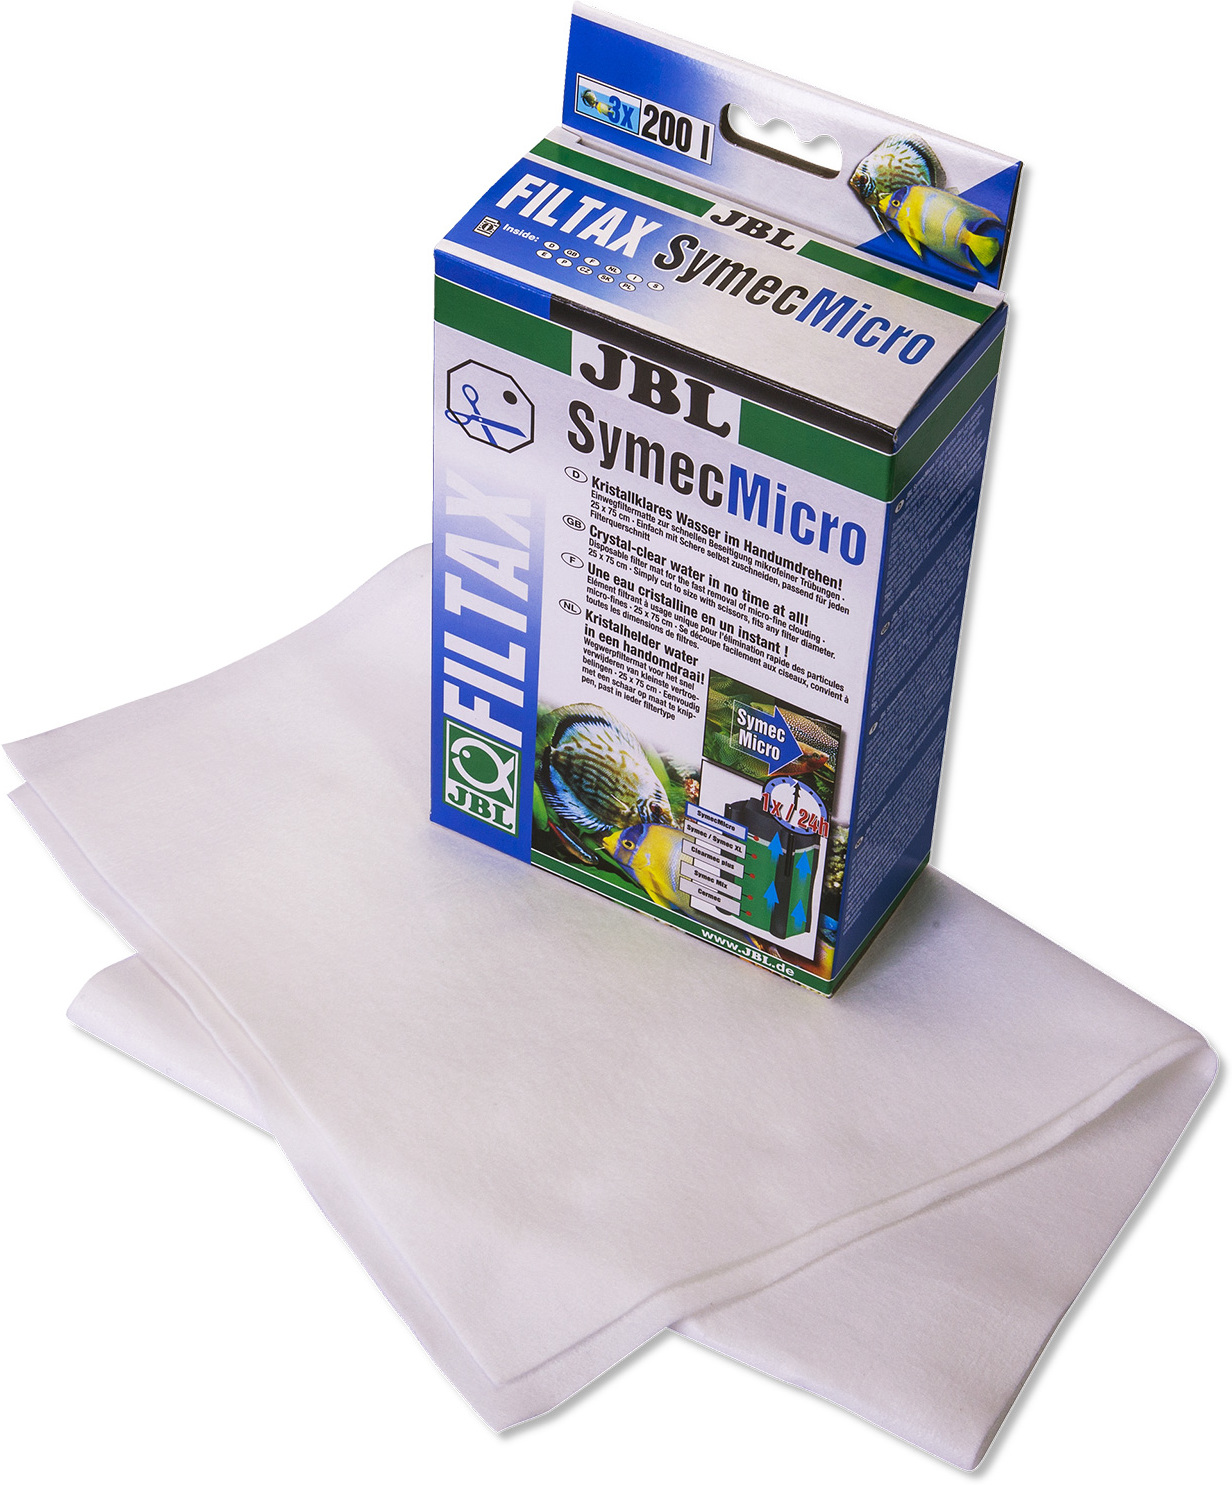 JBL SymecMicro material filtrant - zoom